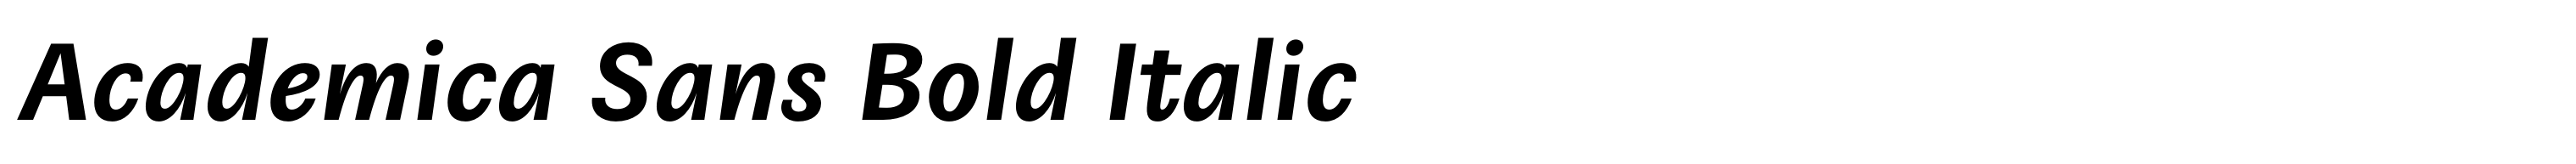 Academica Sans Bold Italic